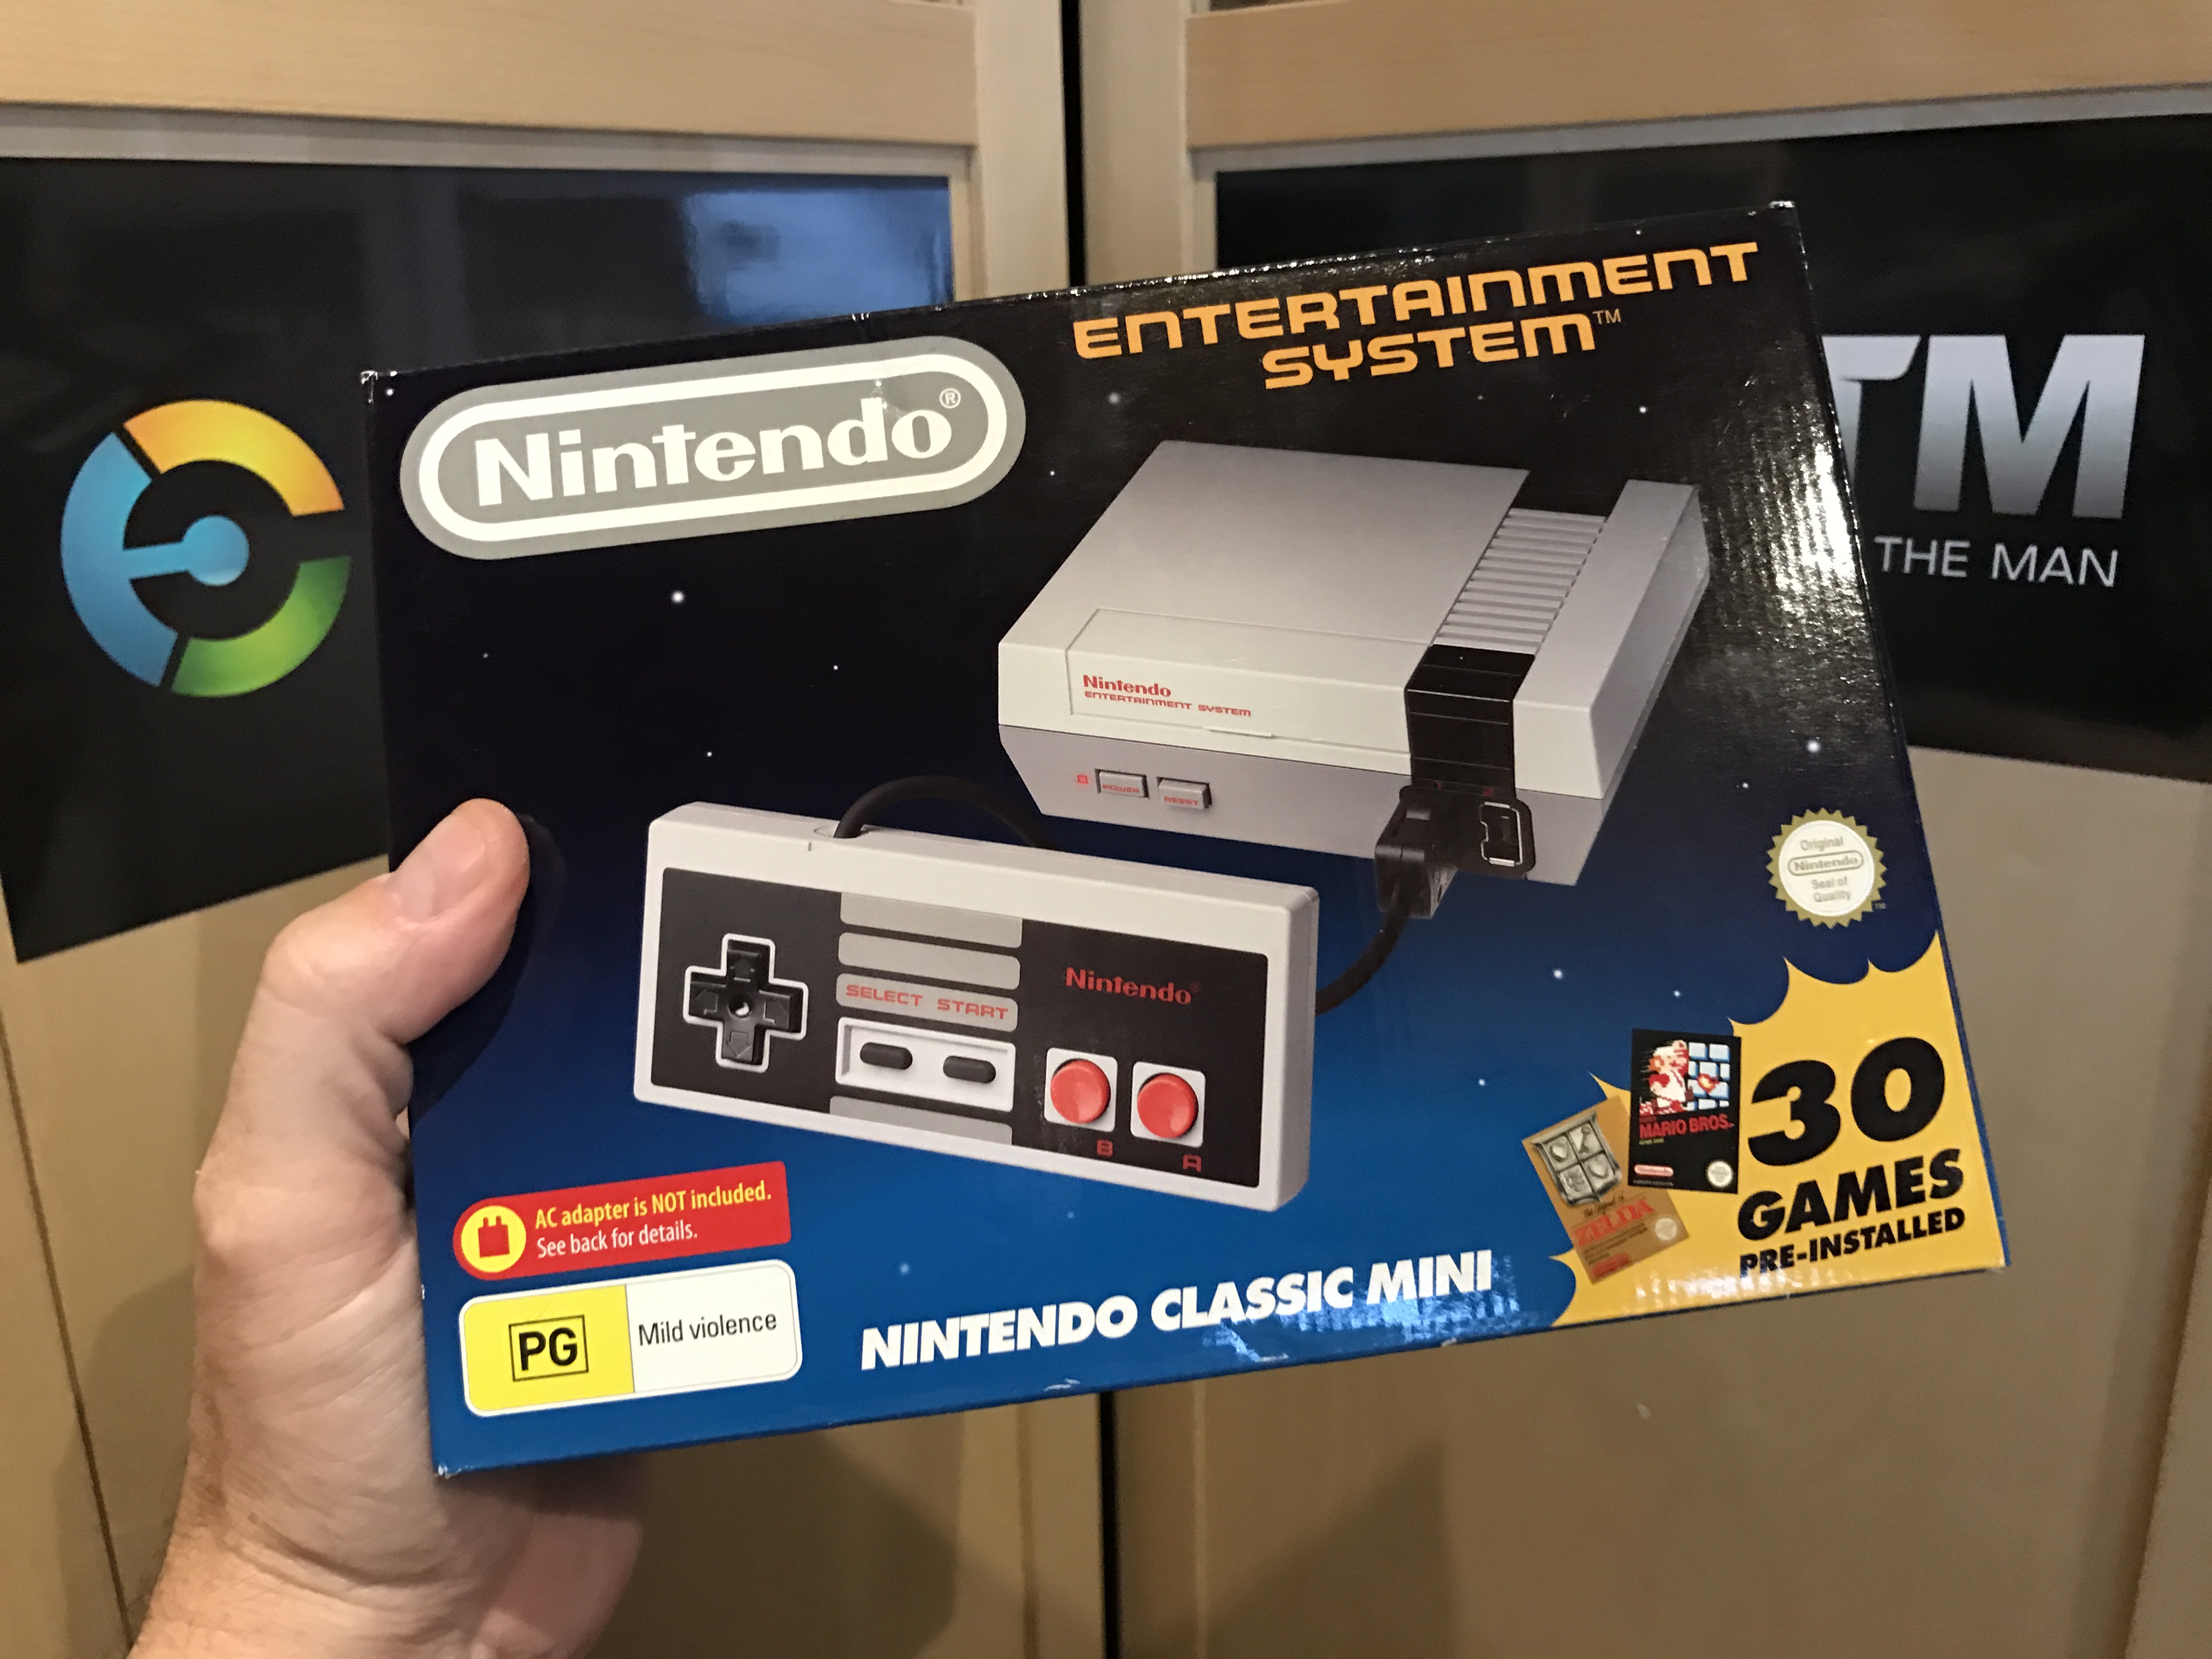 Nintendo Entertainment System Classic Mini. Nintendo NES Classic. Nintendo Classic Mini: Nintendo Entertainment System. NES Classic stock update.